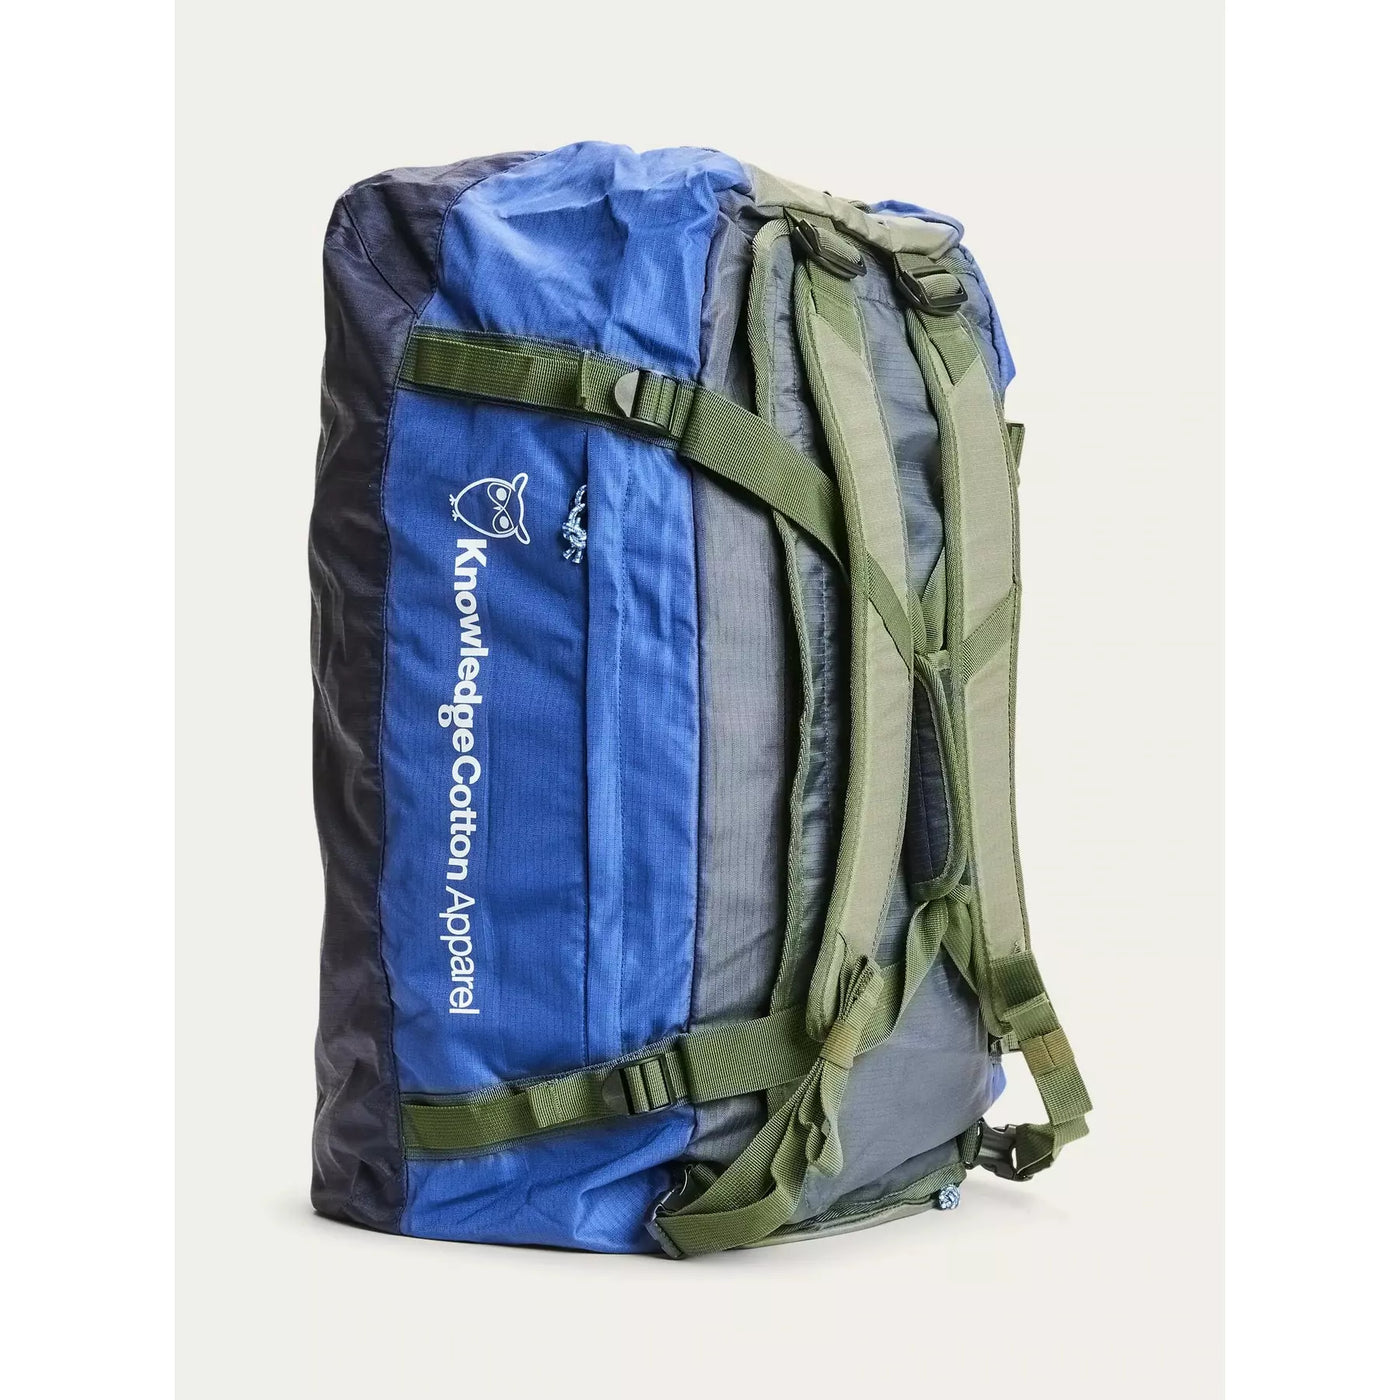 Packable duffel backpack 50L